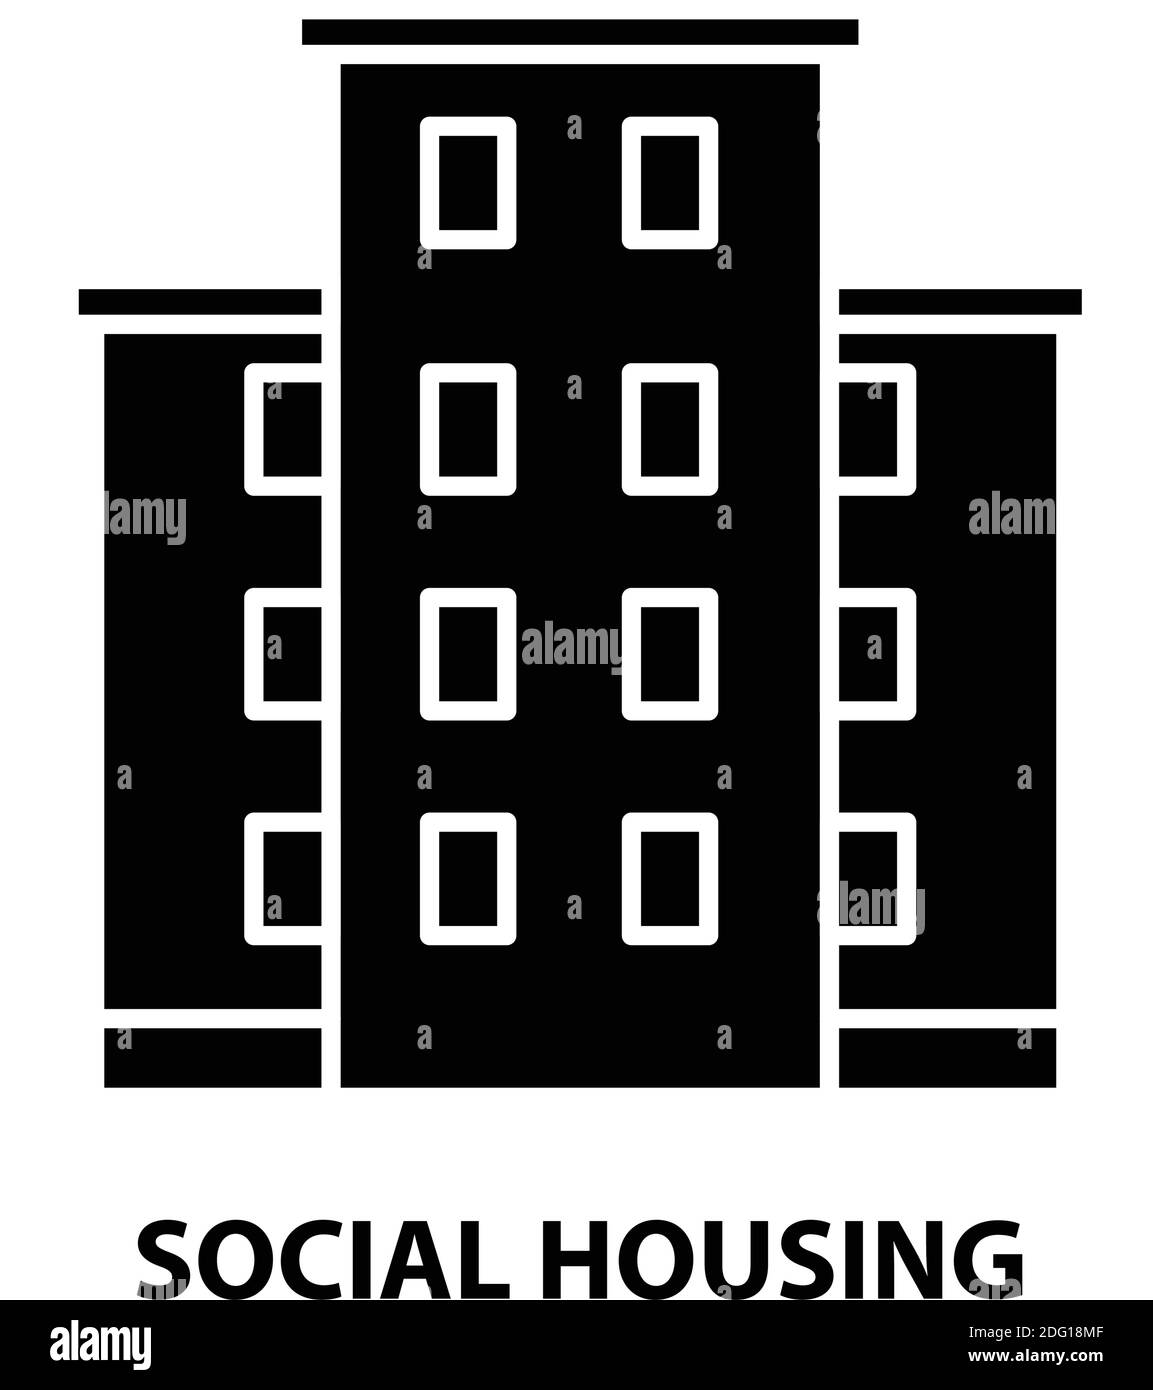 social housing icon, black vector sign with editable strokes, concept illustration Stock Vector